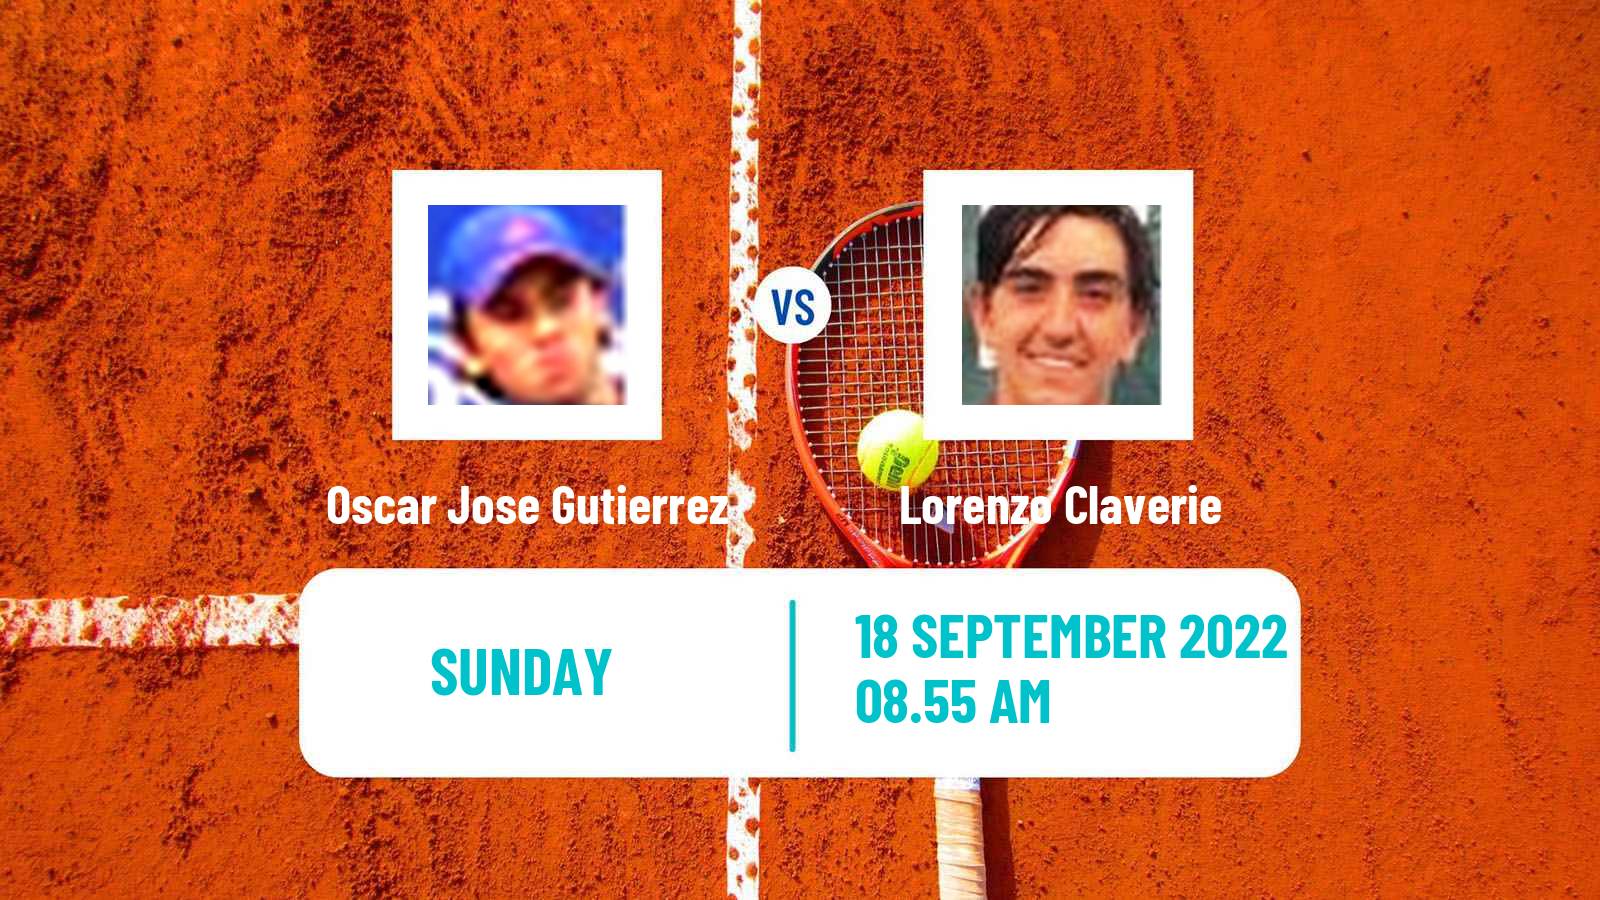 Tennis ATP Challenger Oscar Jose Gutierrez - Lorenzo Claverie